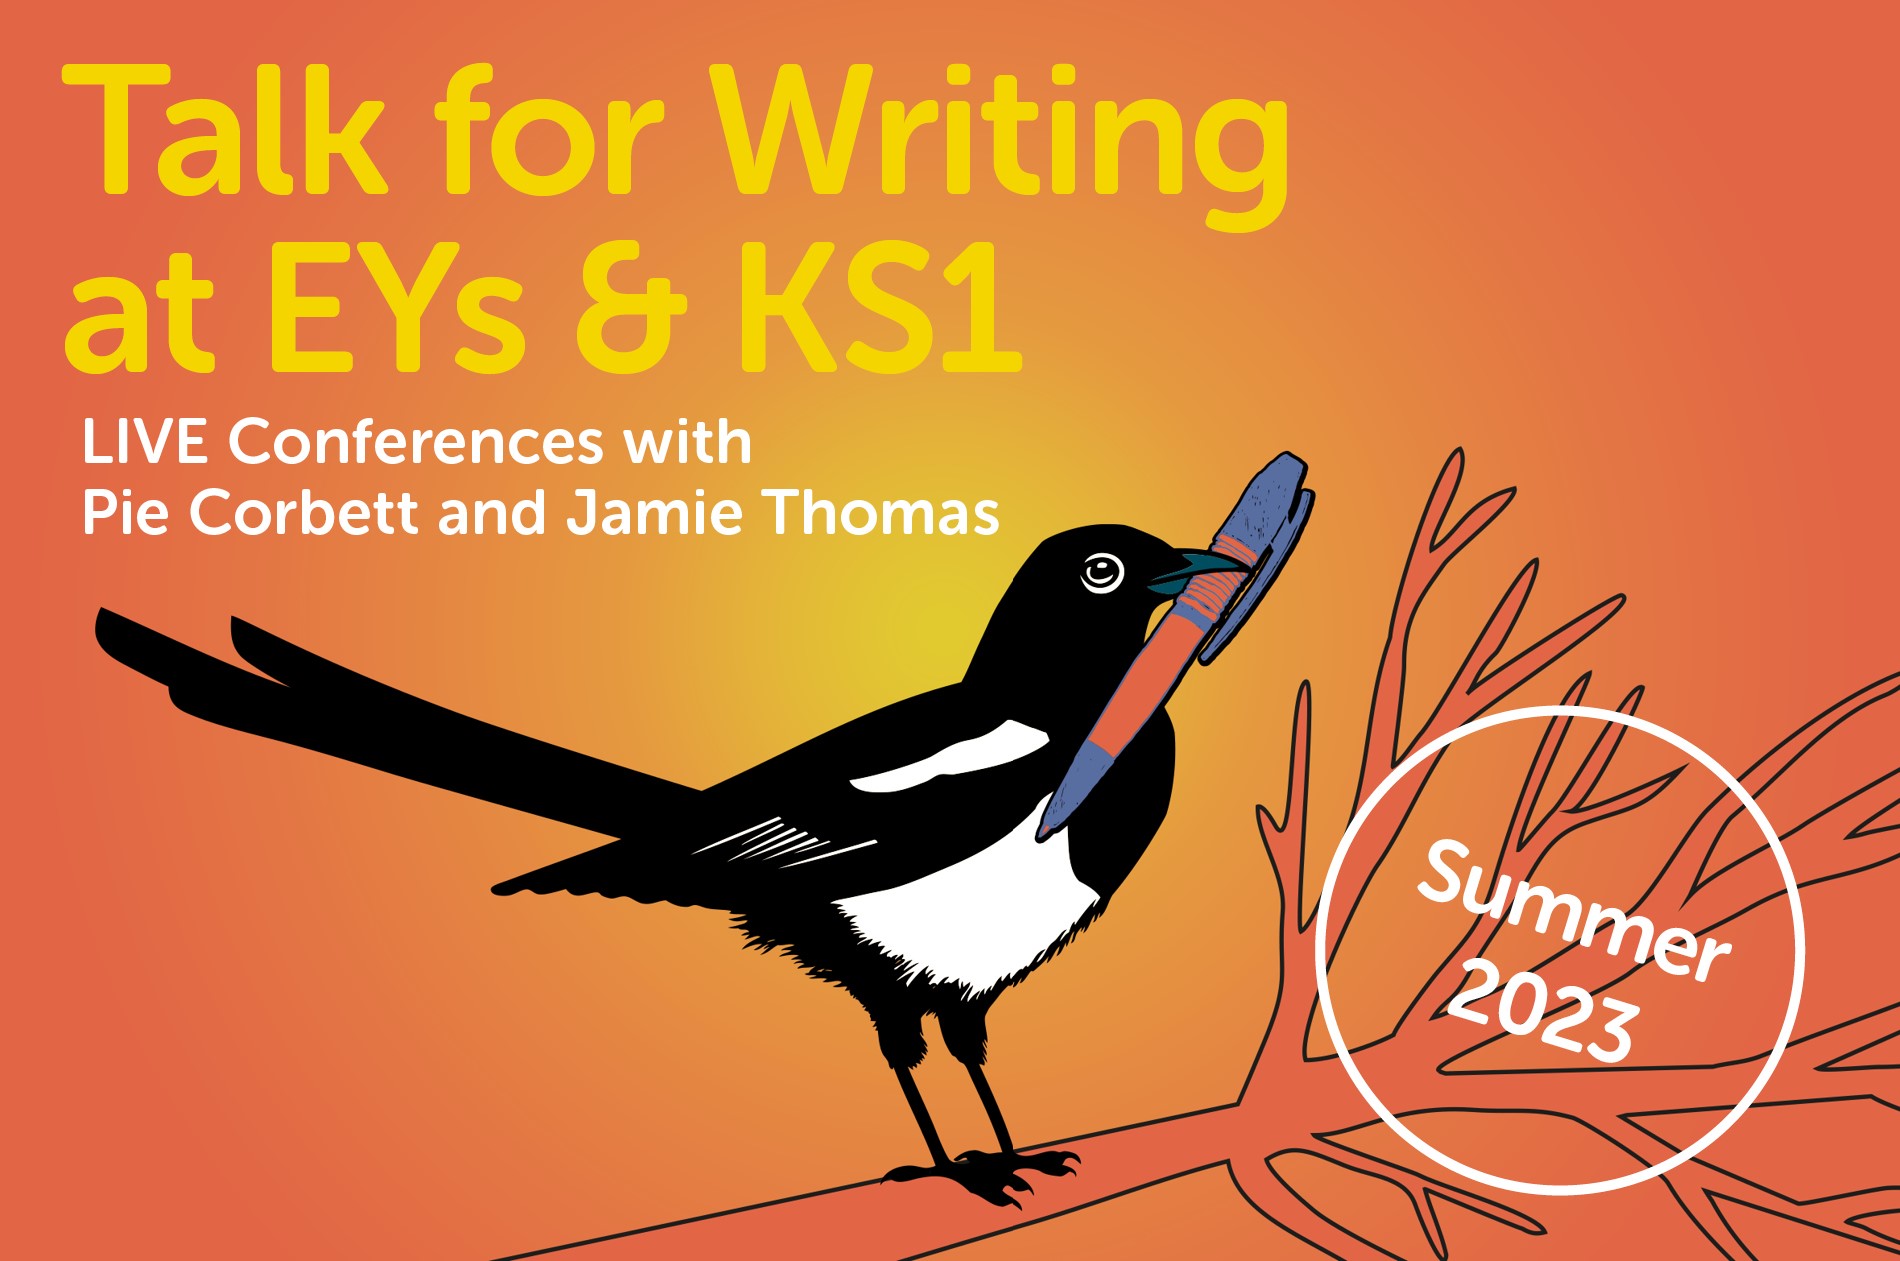 EYs & KS1 Conferences